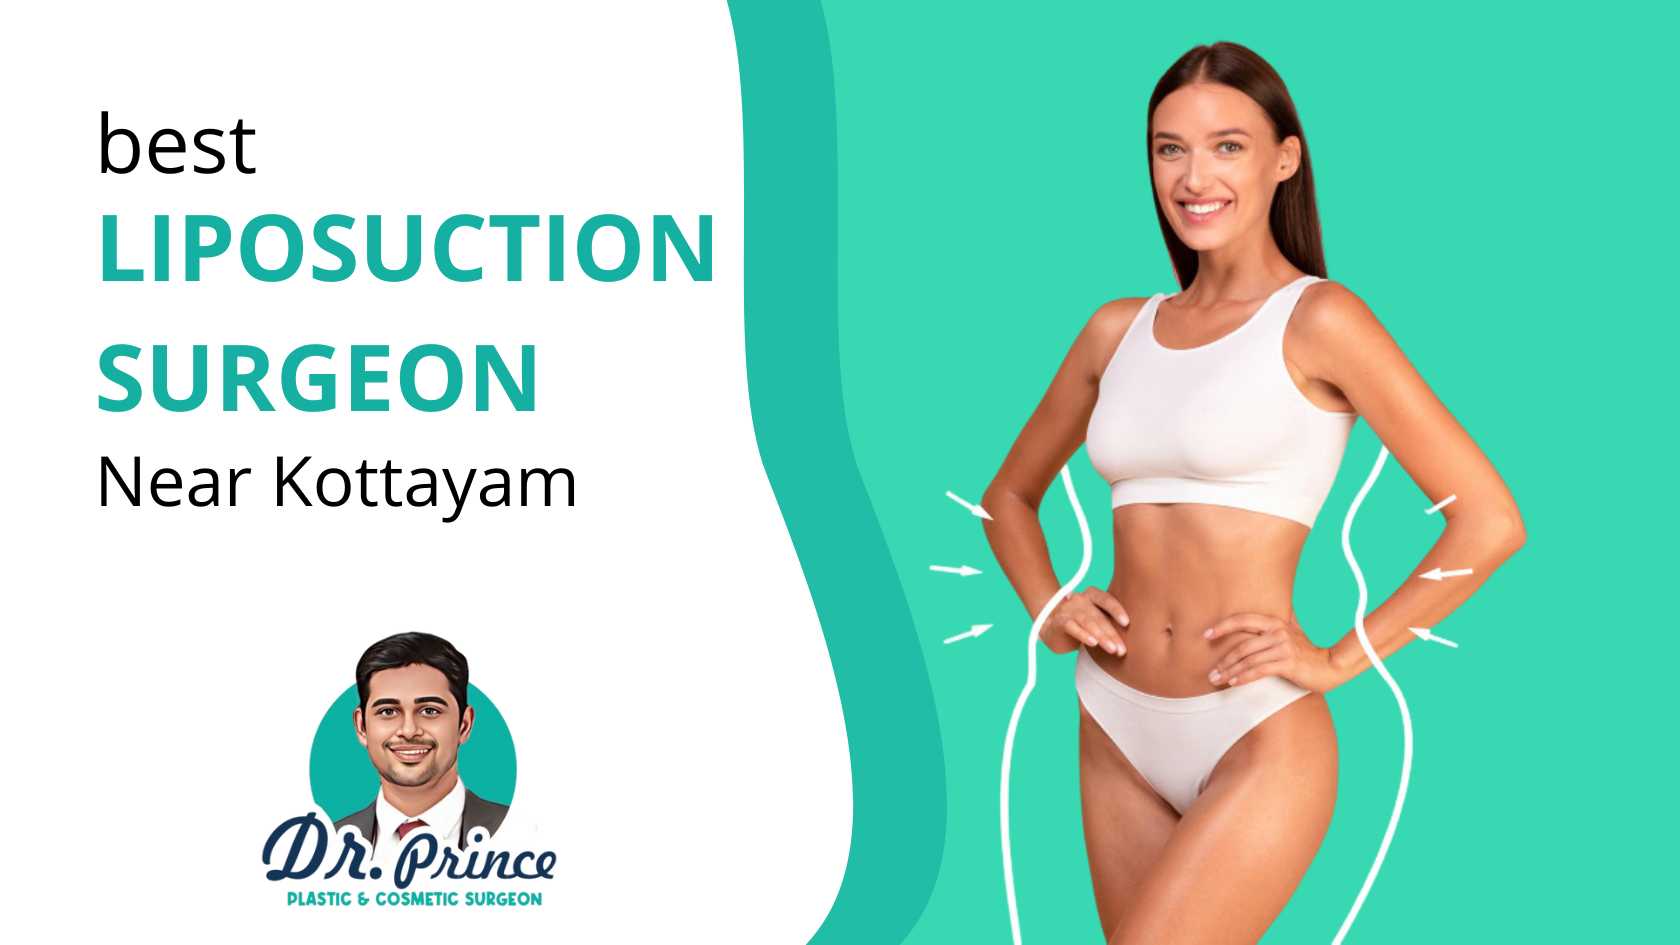 Best Liposuction Surgeon Near Kottayam - Transform Your Body Contour